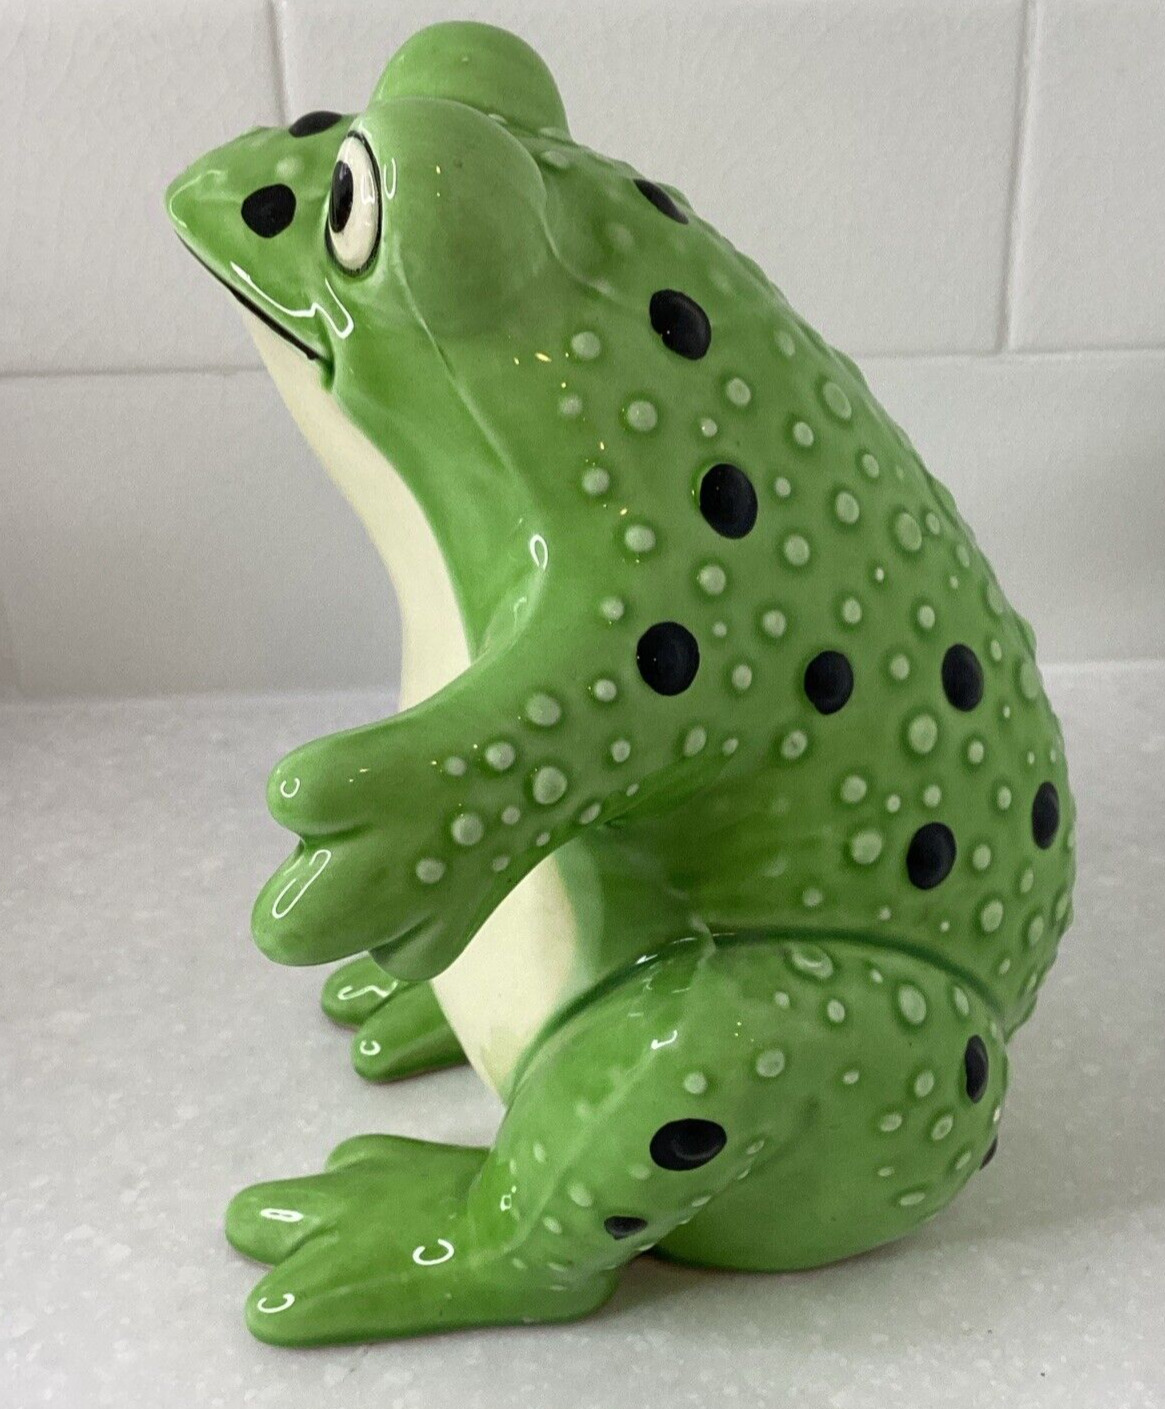 Schmid Bros Georges Briard Sitting Ceramic Vintage Green Frog Black Spots Figure